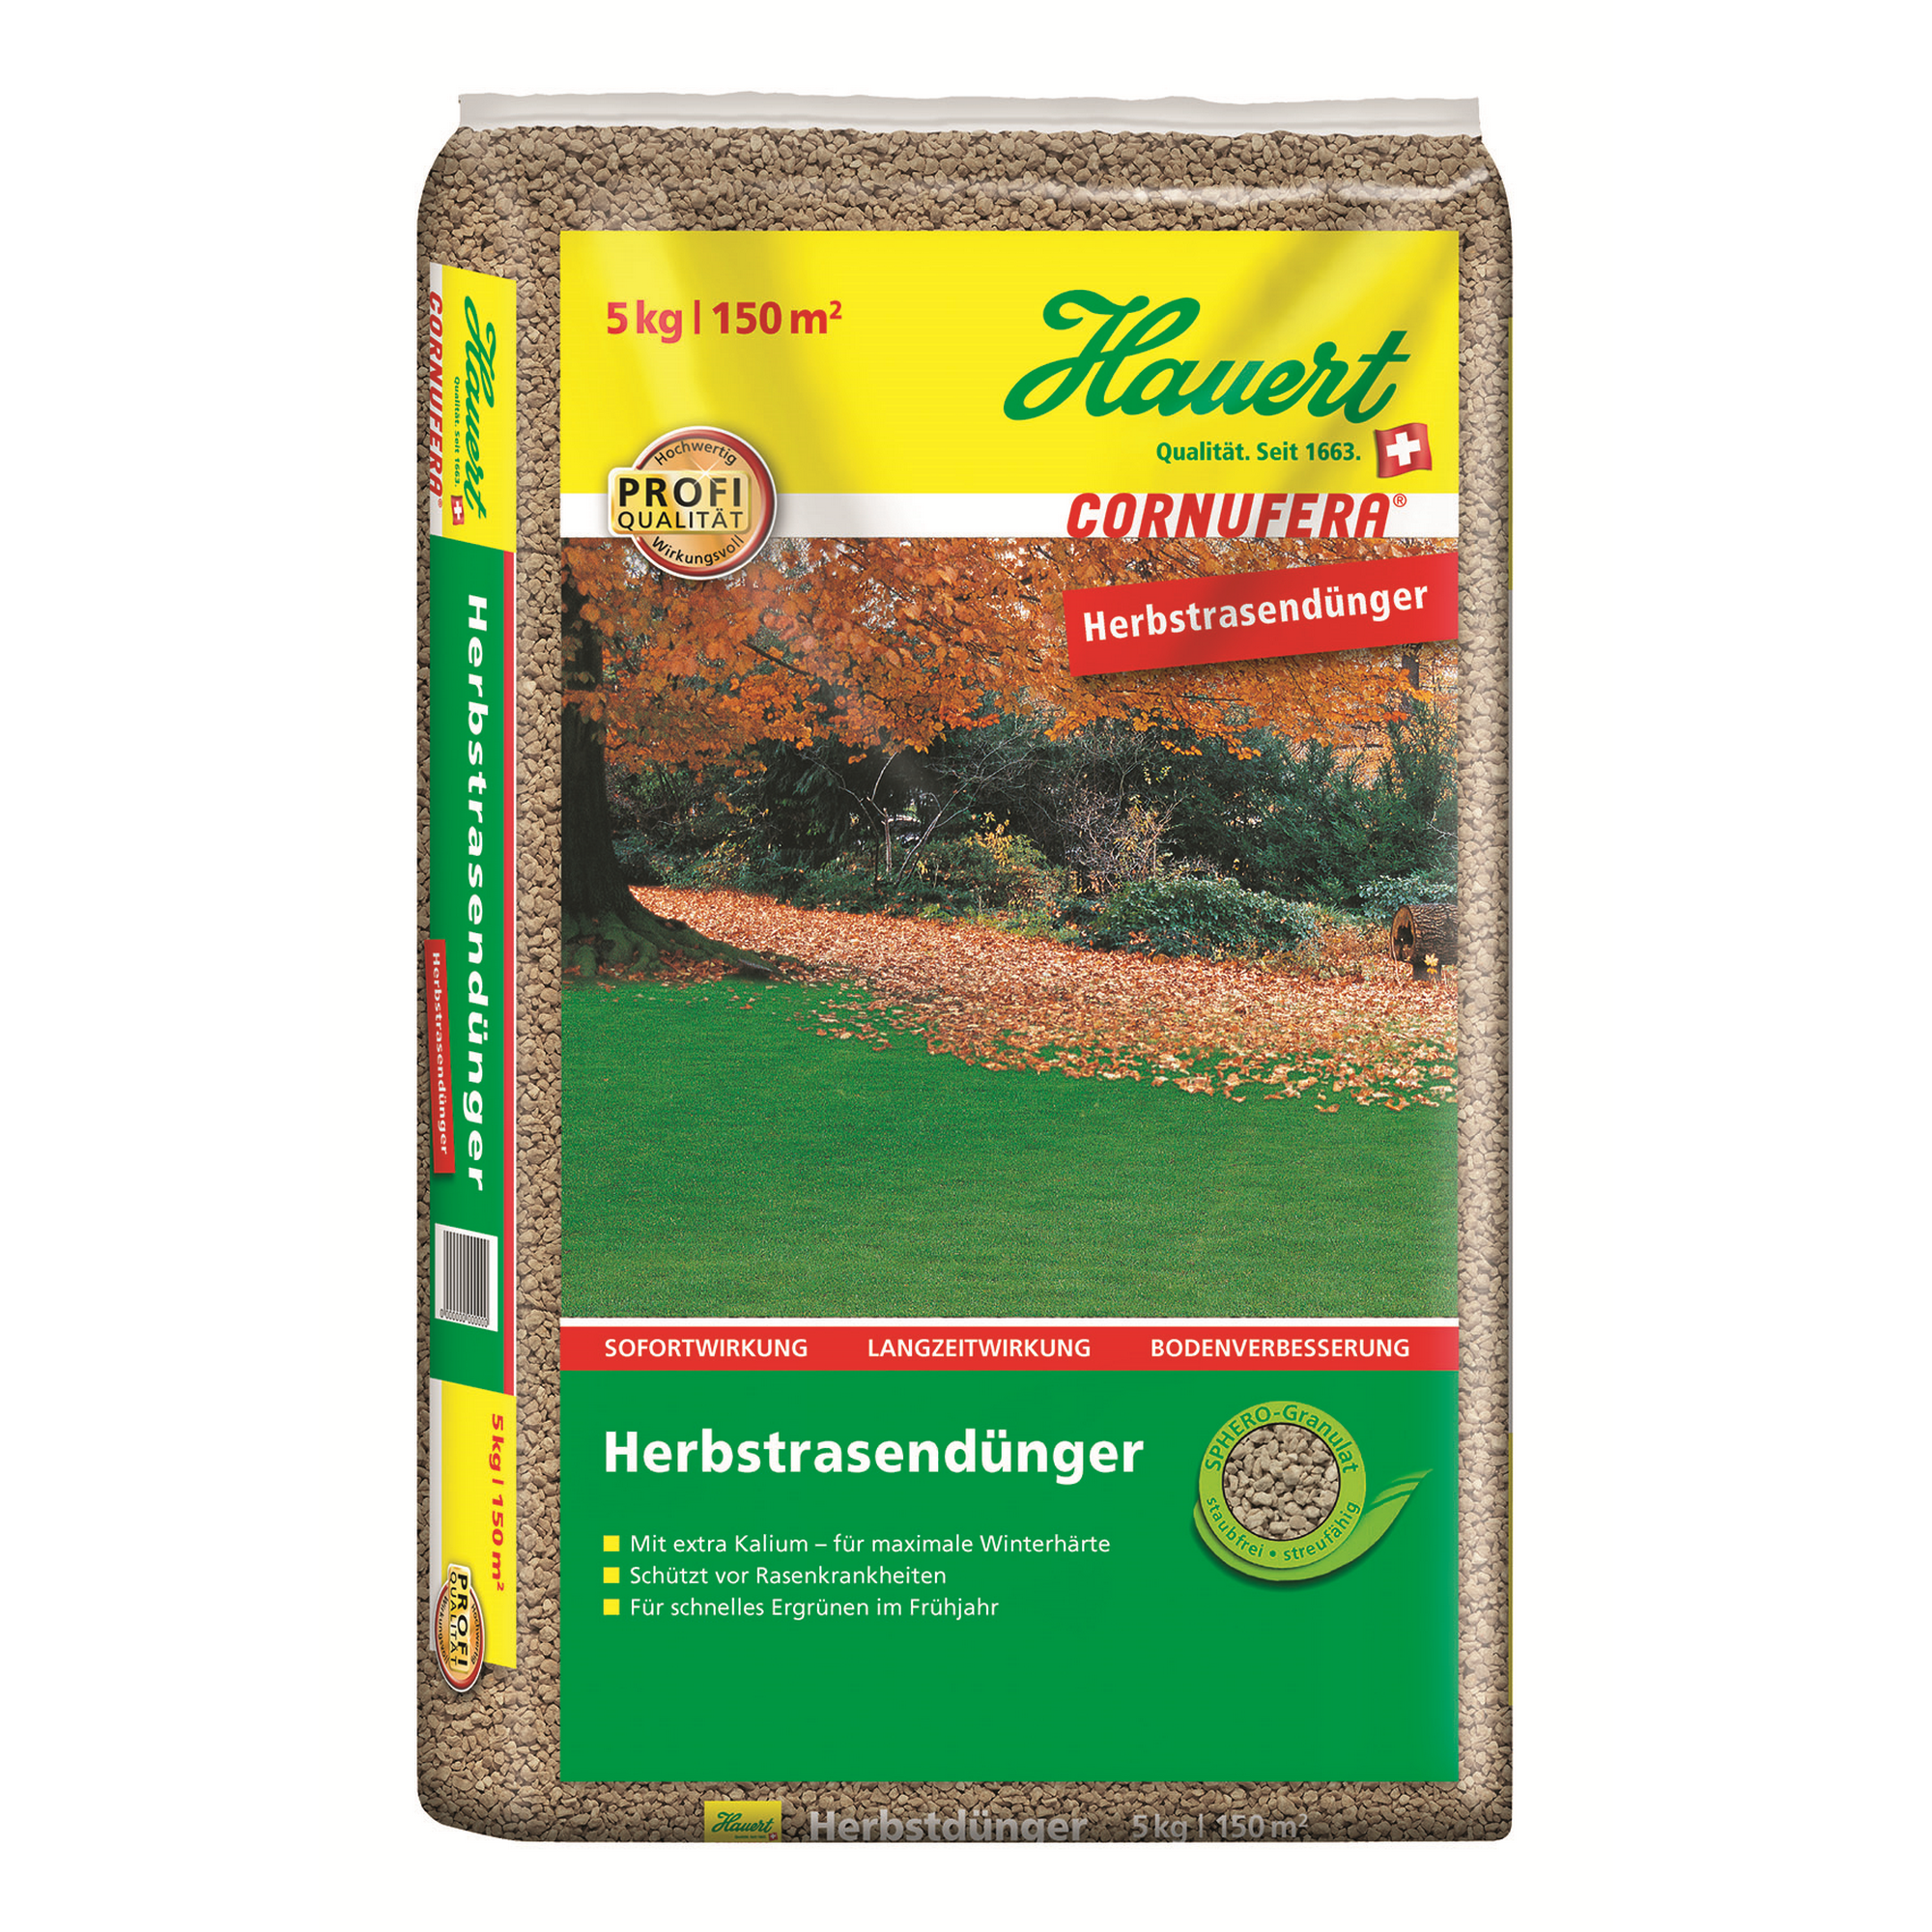 Herbstrasendünger Cornufera® 5 kg + product picture